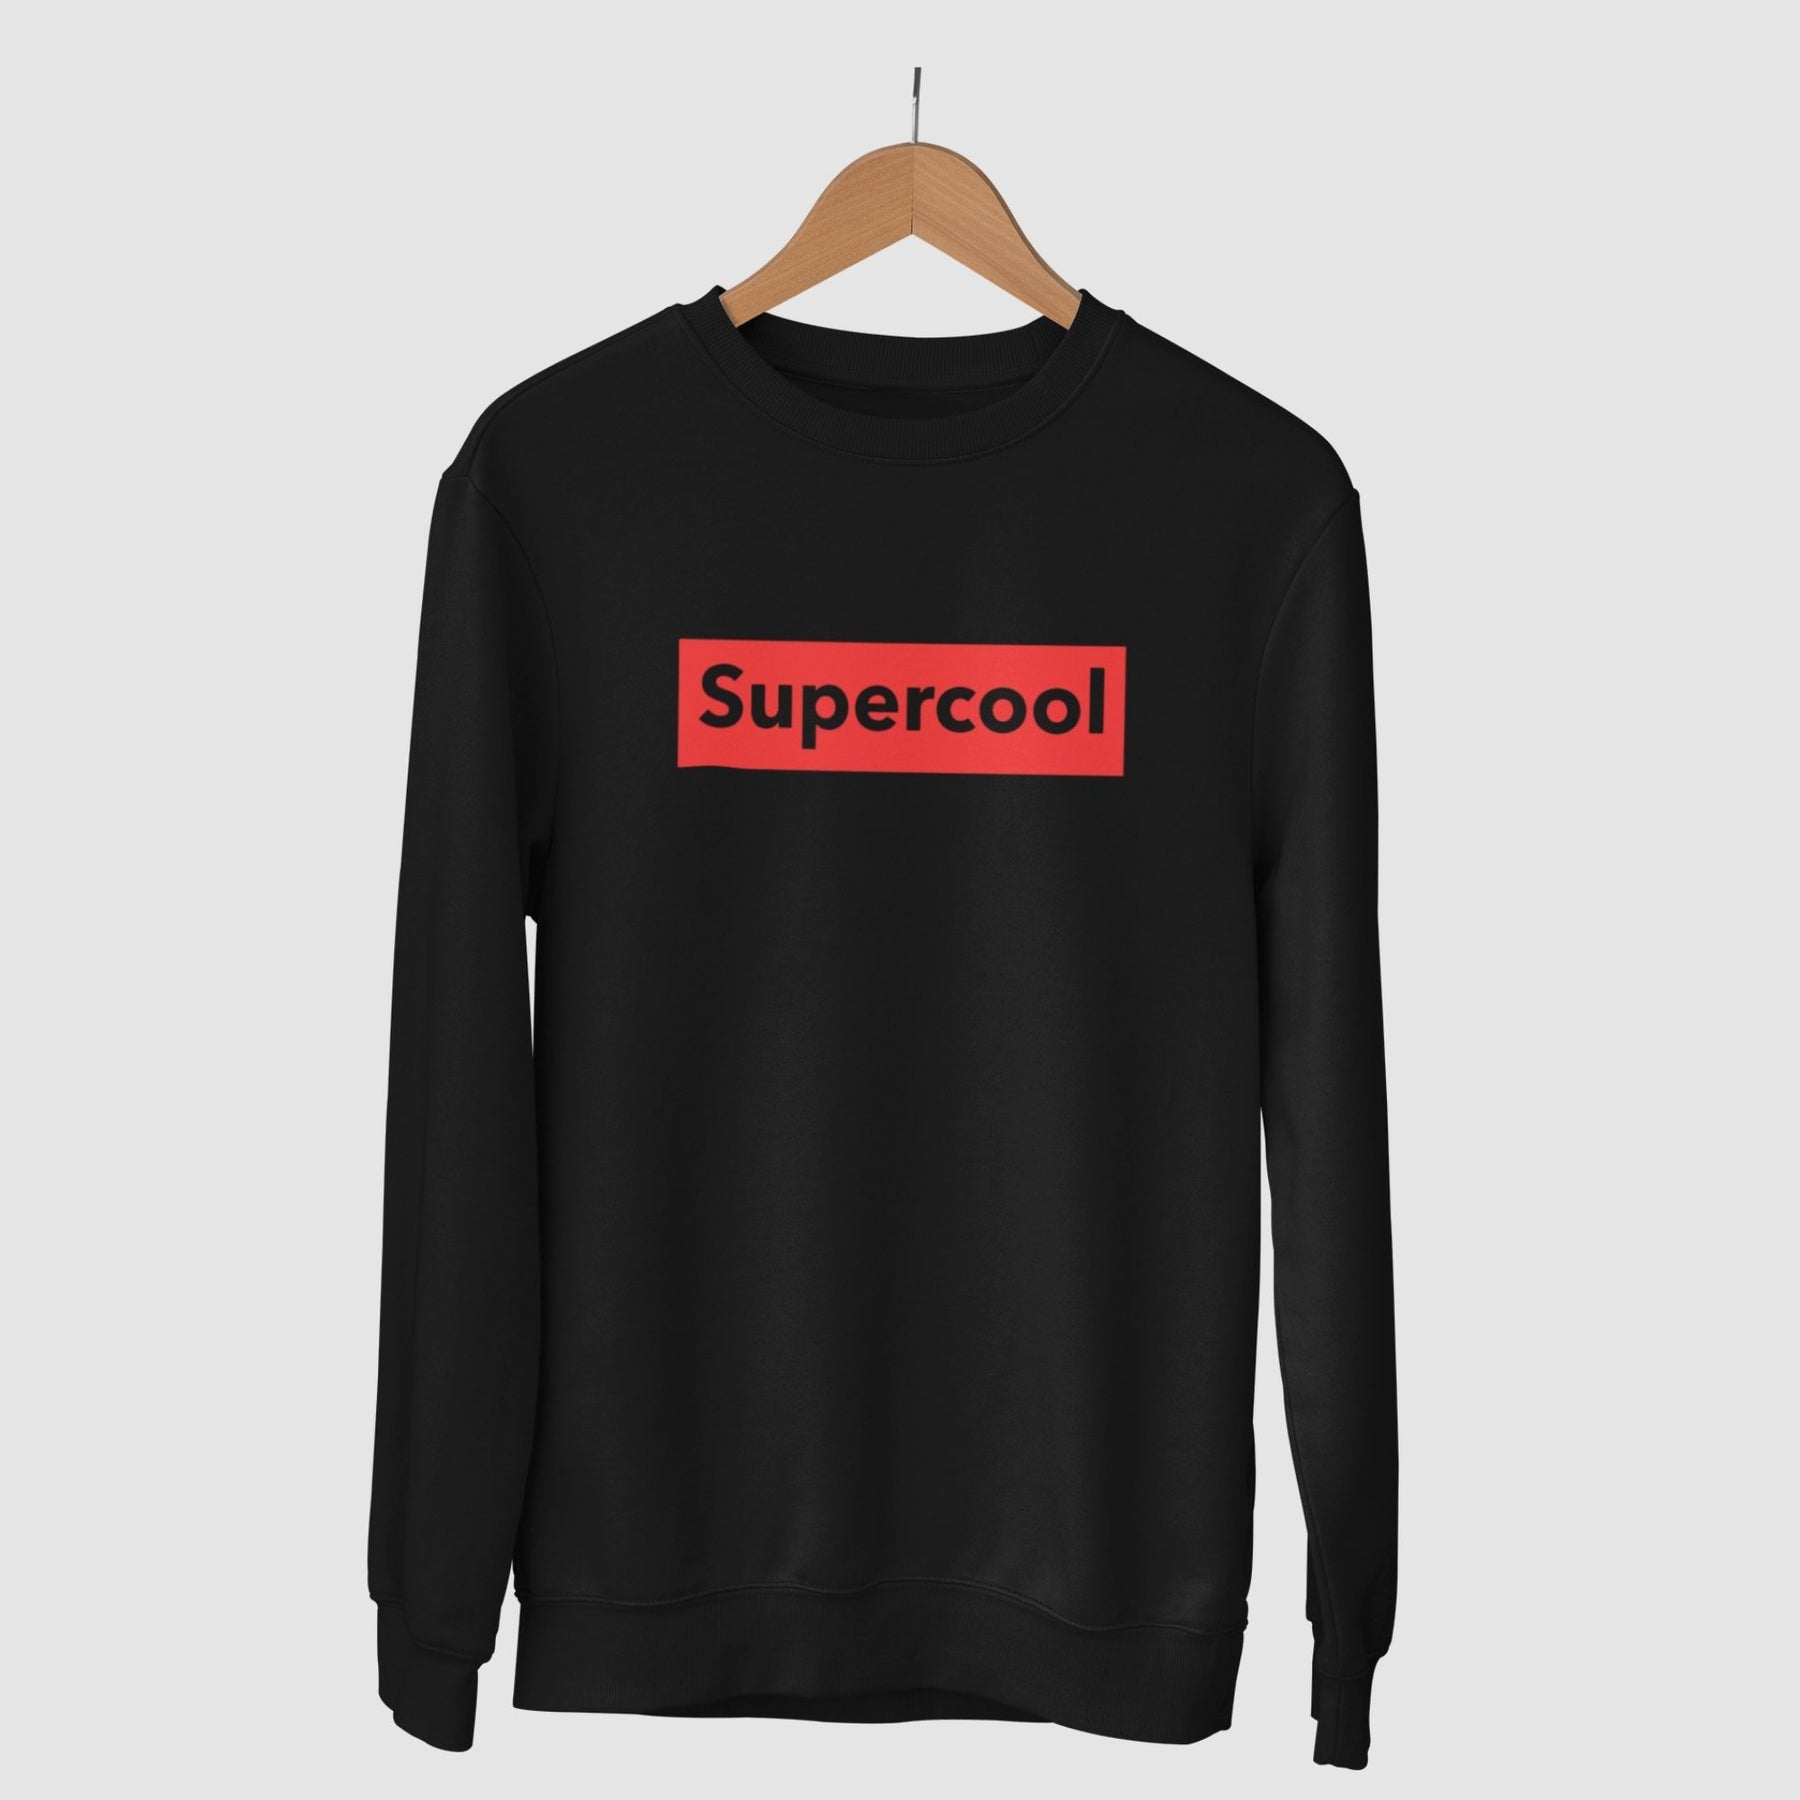 supercool-cotton-printed-unisex-black-sweatshirt-gogirgit-com